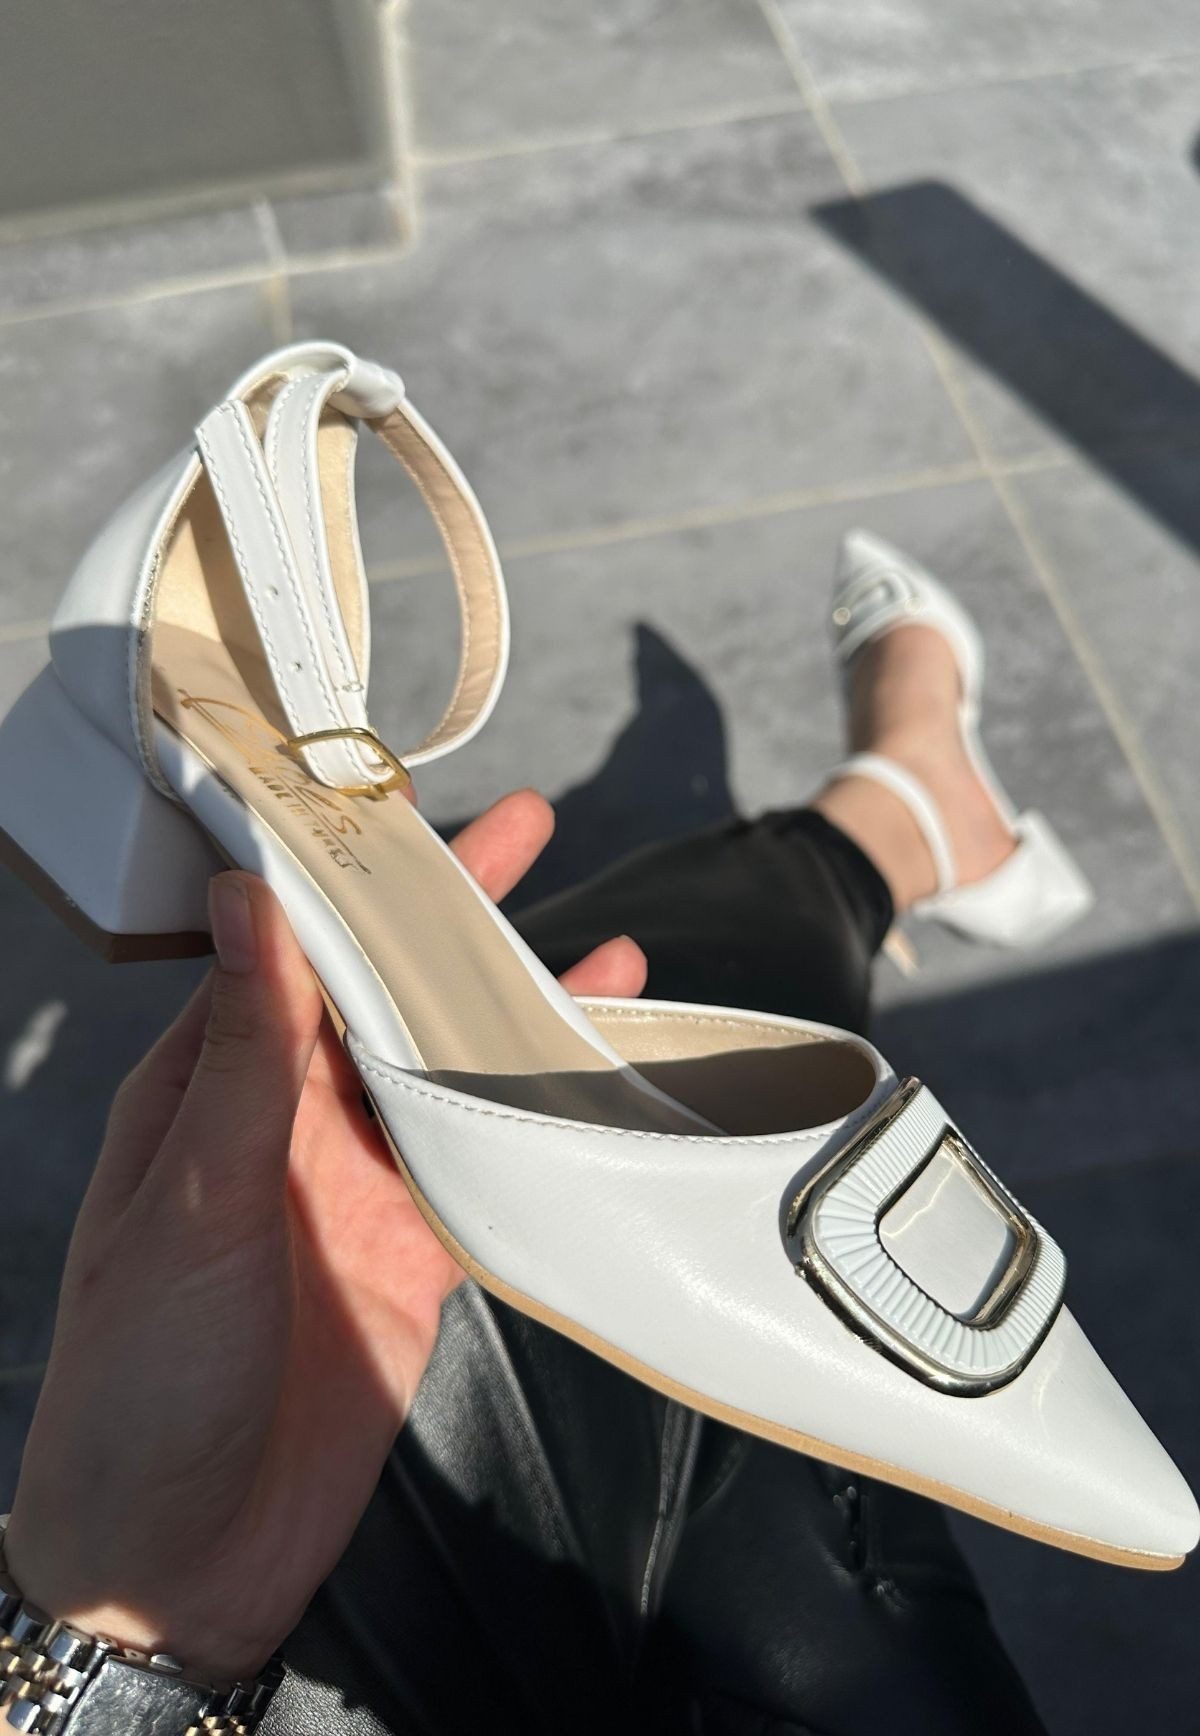 Lisinya943 Beyaz Cilt Topuklu Ayakkabı